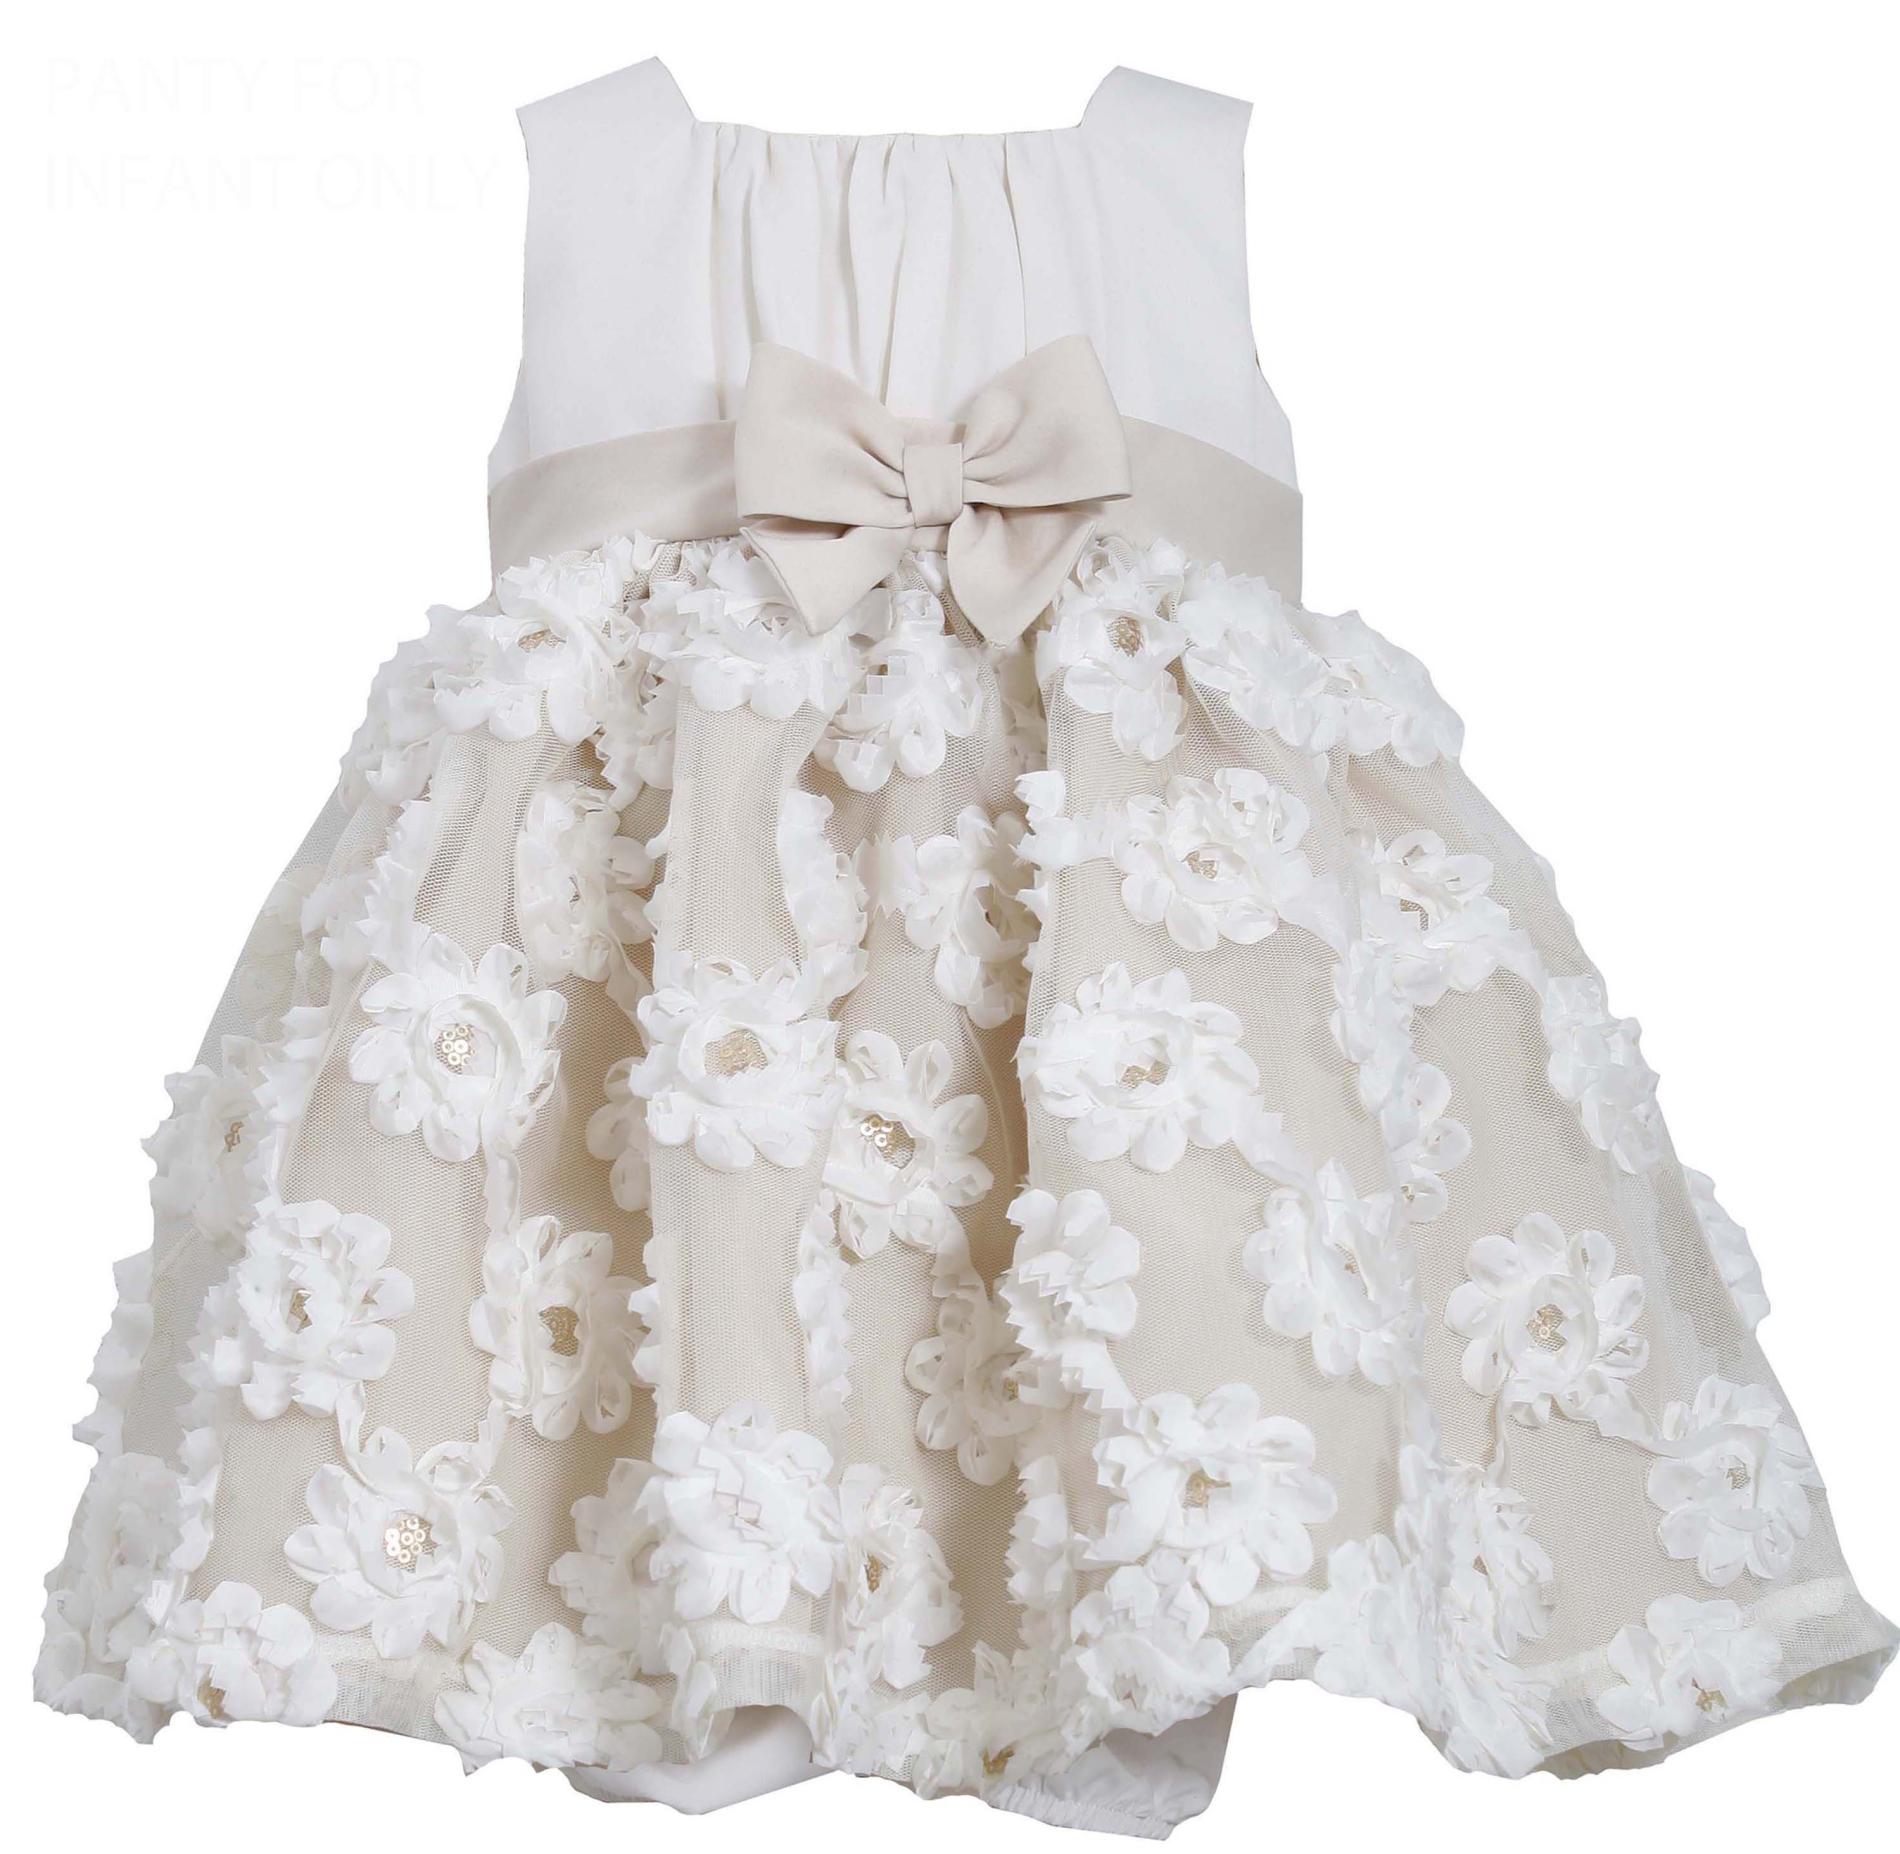 Ashley Ann Infant & Toddler Girl's Sleeveless Party Dress - Floral